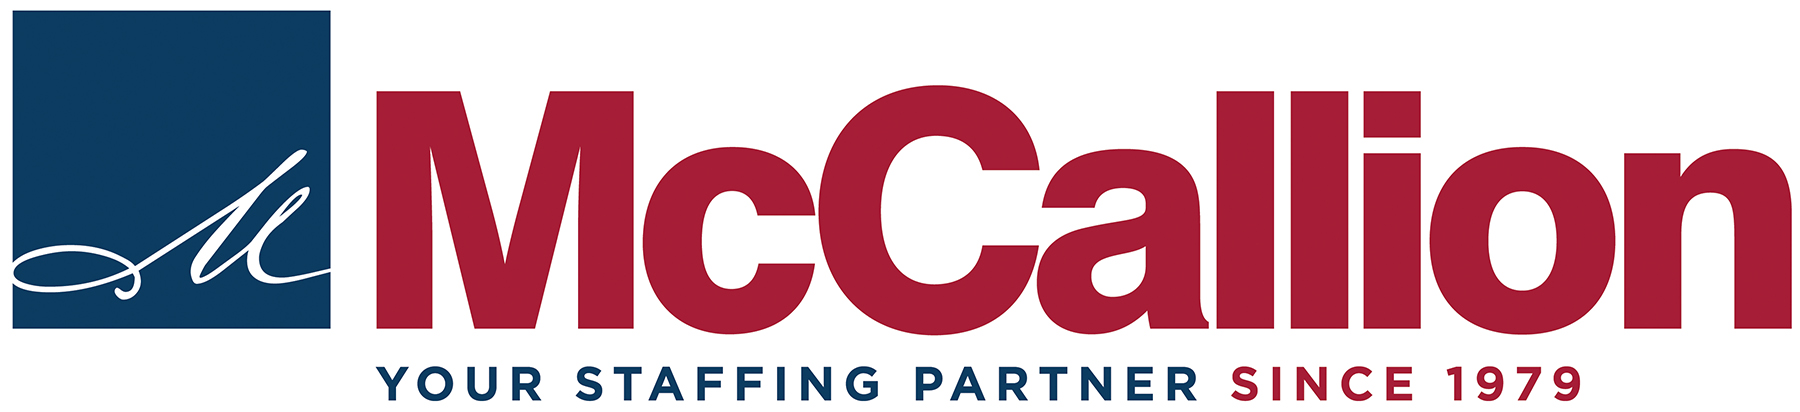 McCallion Staffing Specialists - American Staffing Association